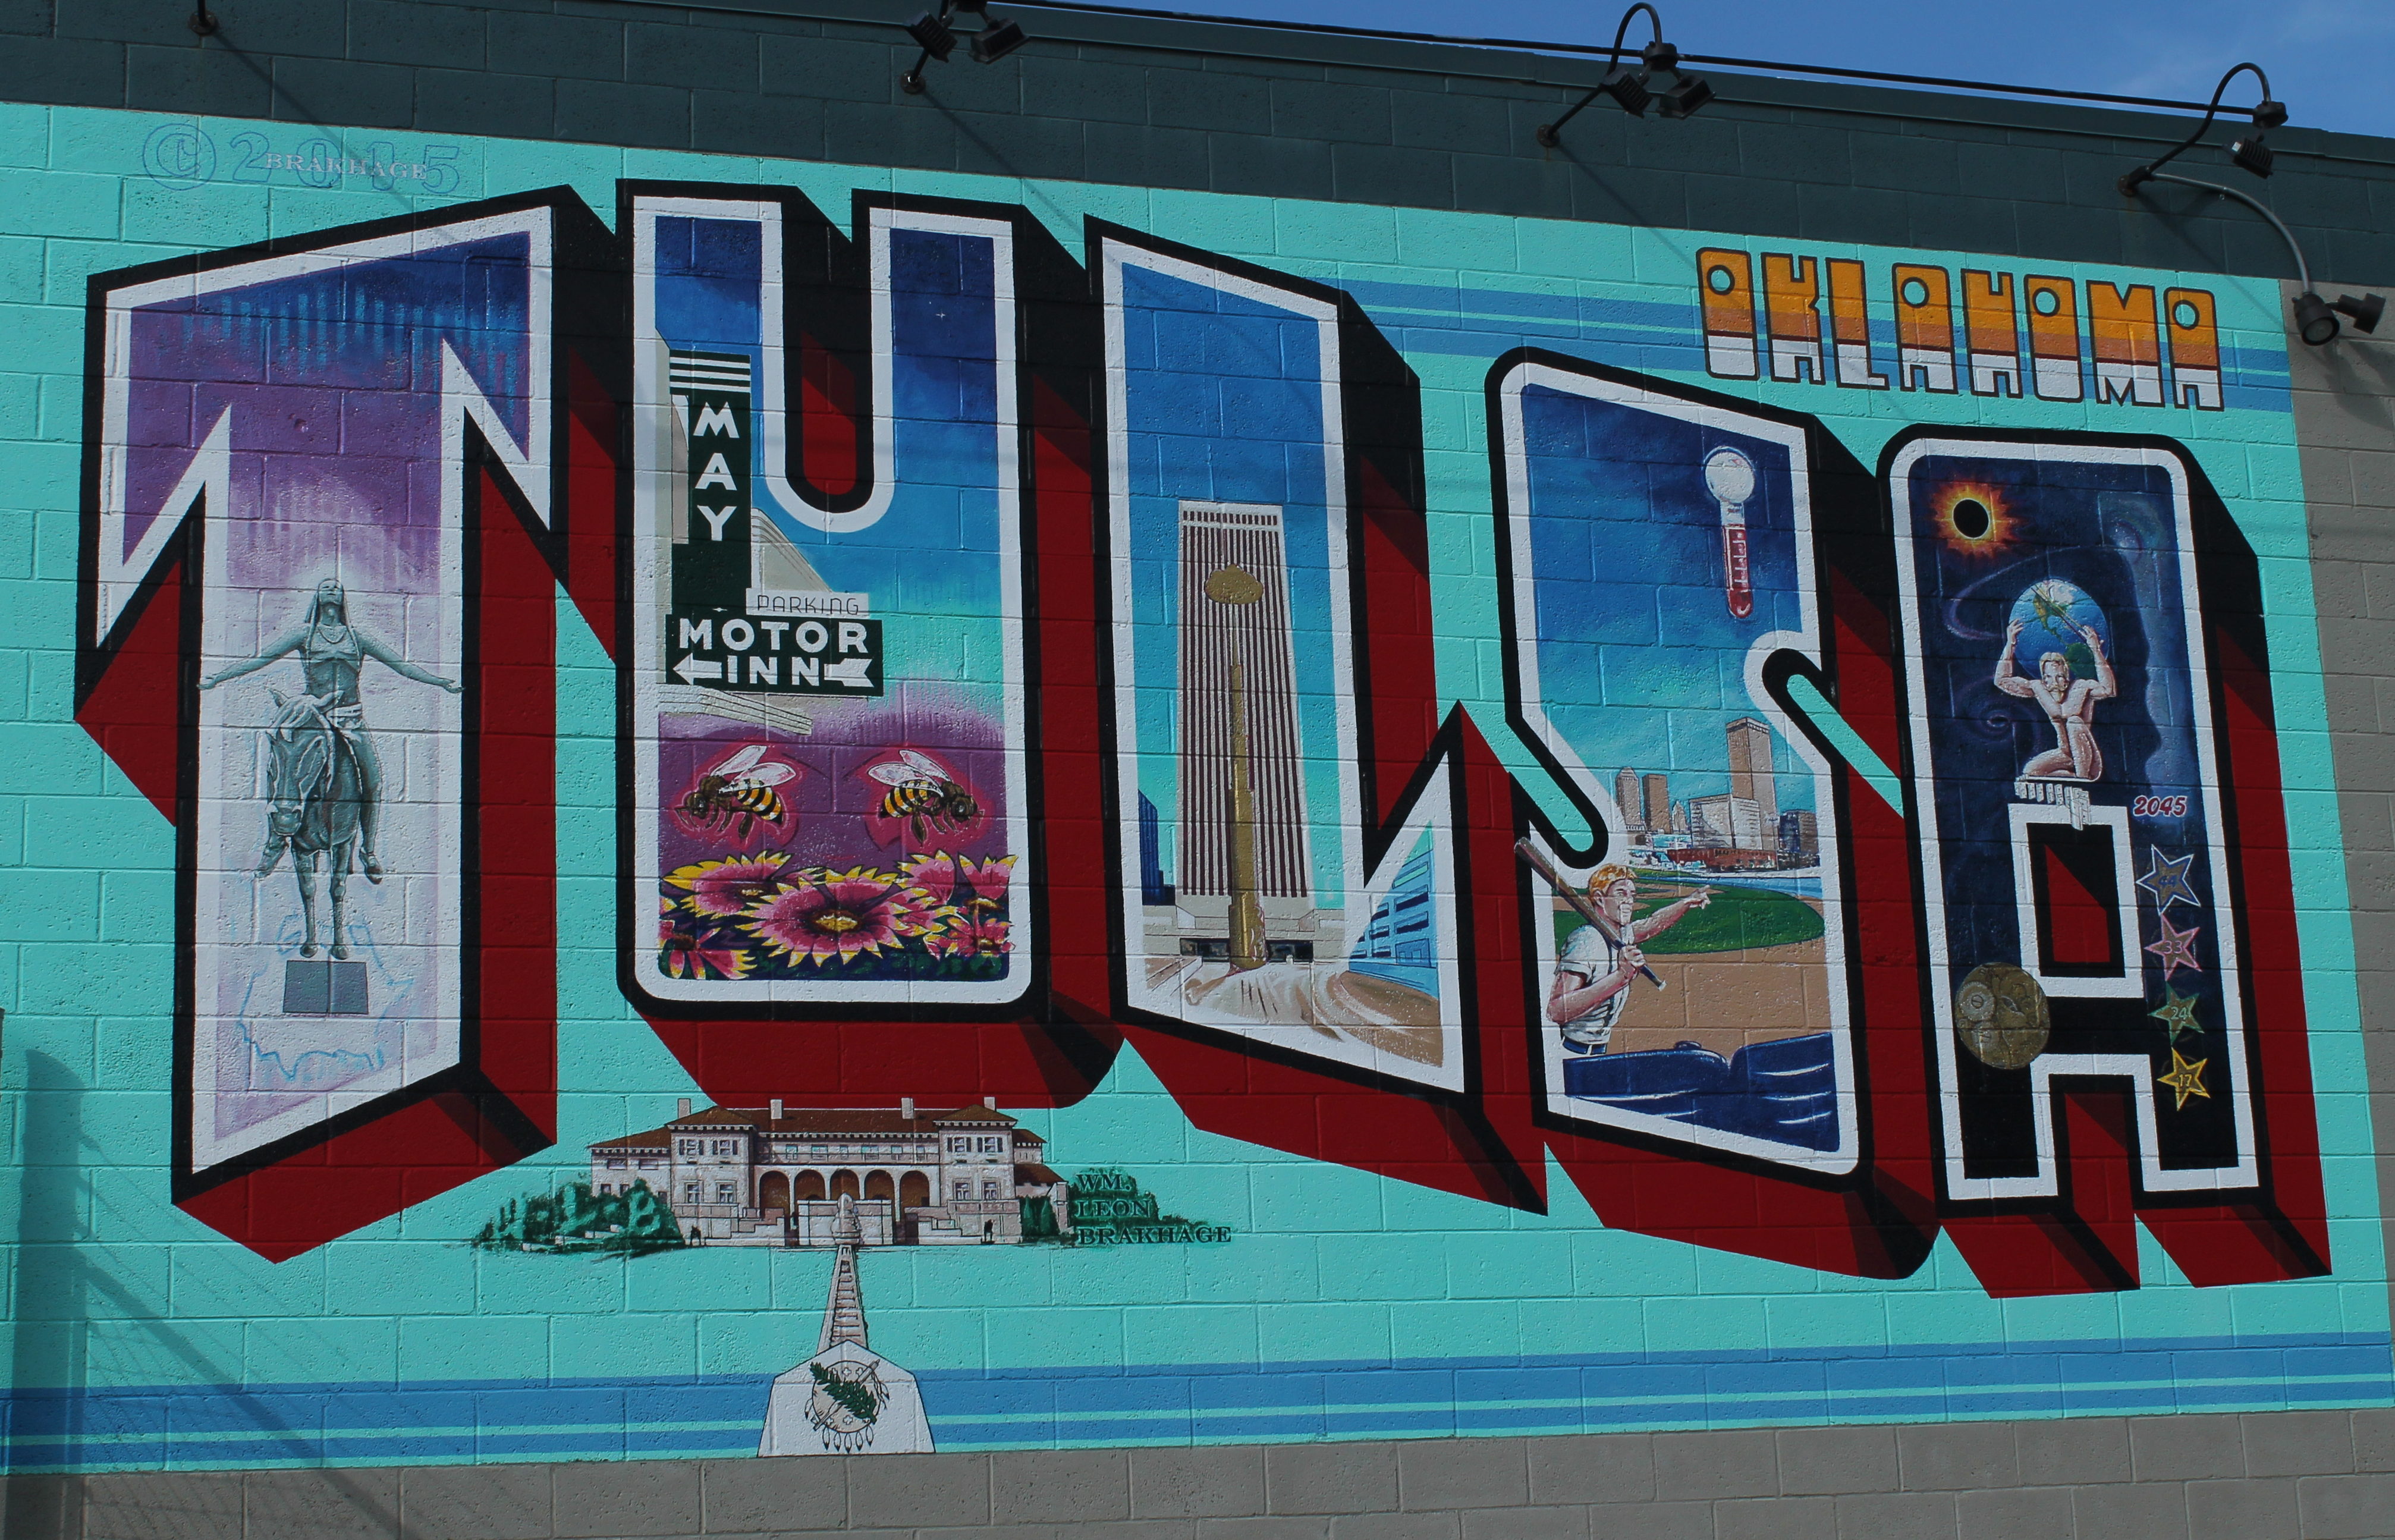 Tulsa postcard mural in Downtown Tulsa, Oklahoma.